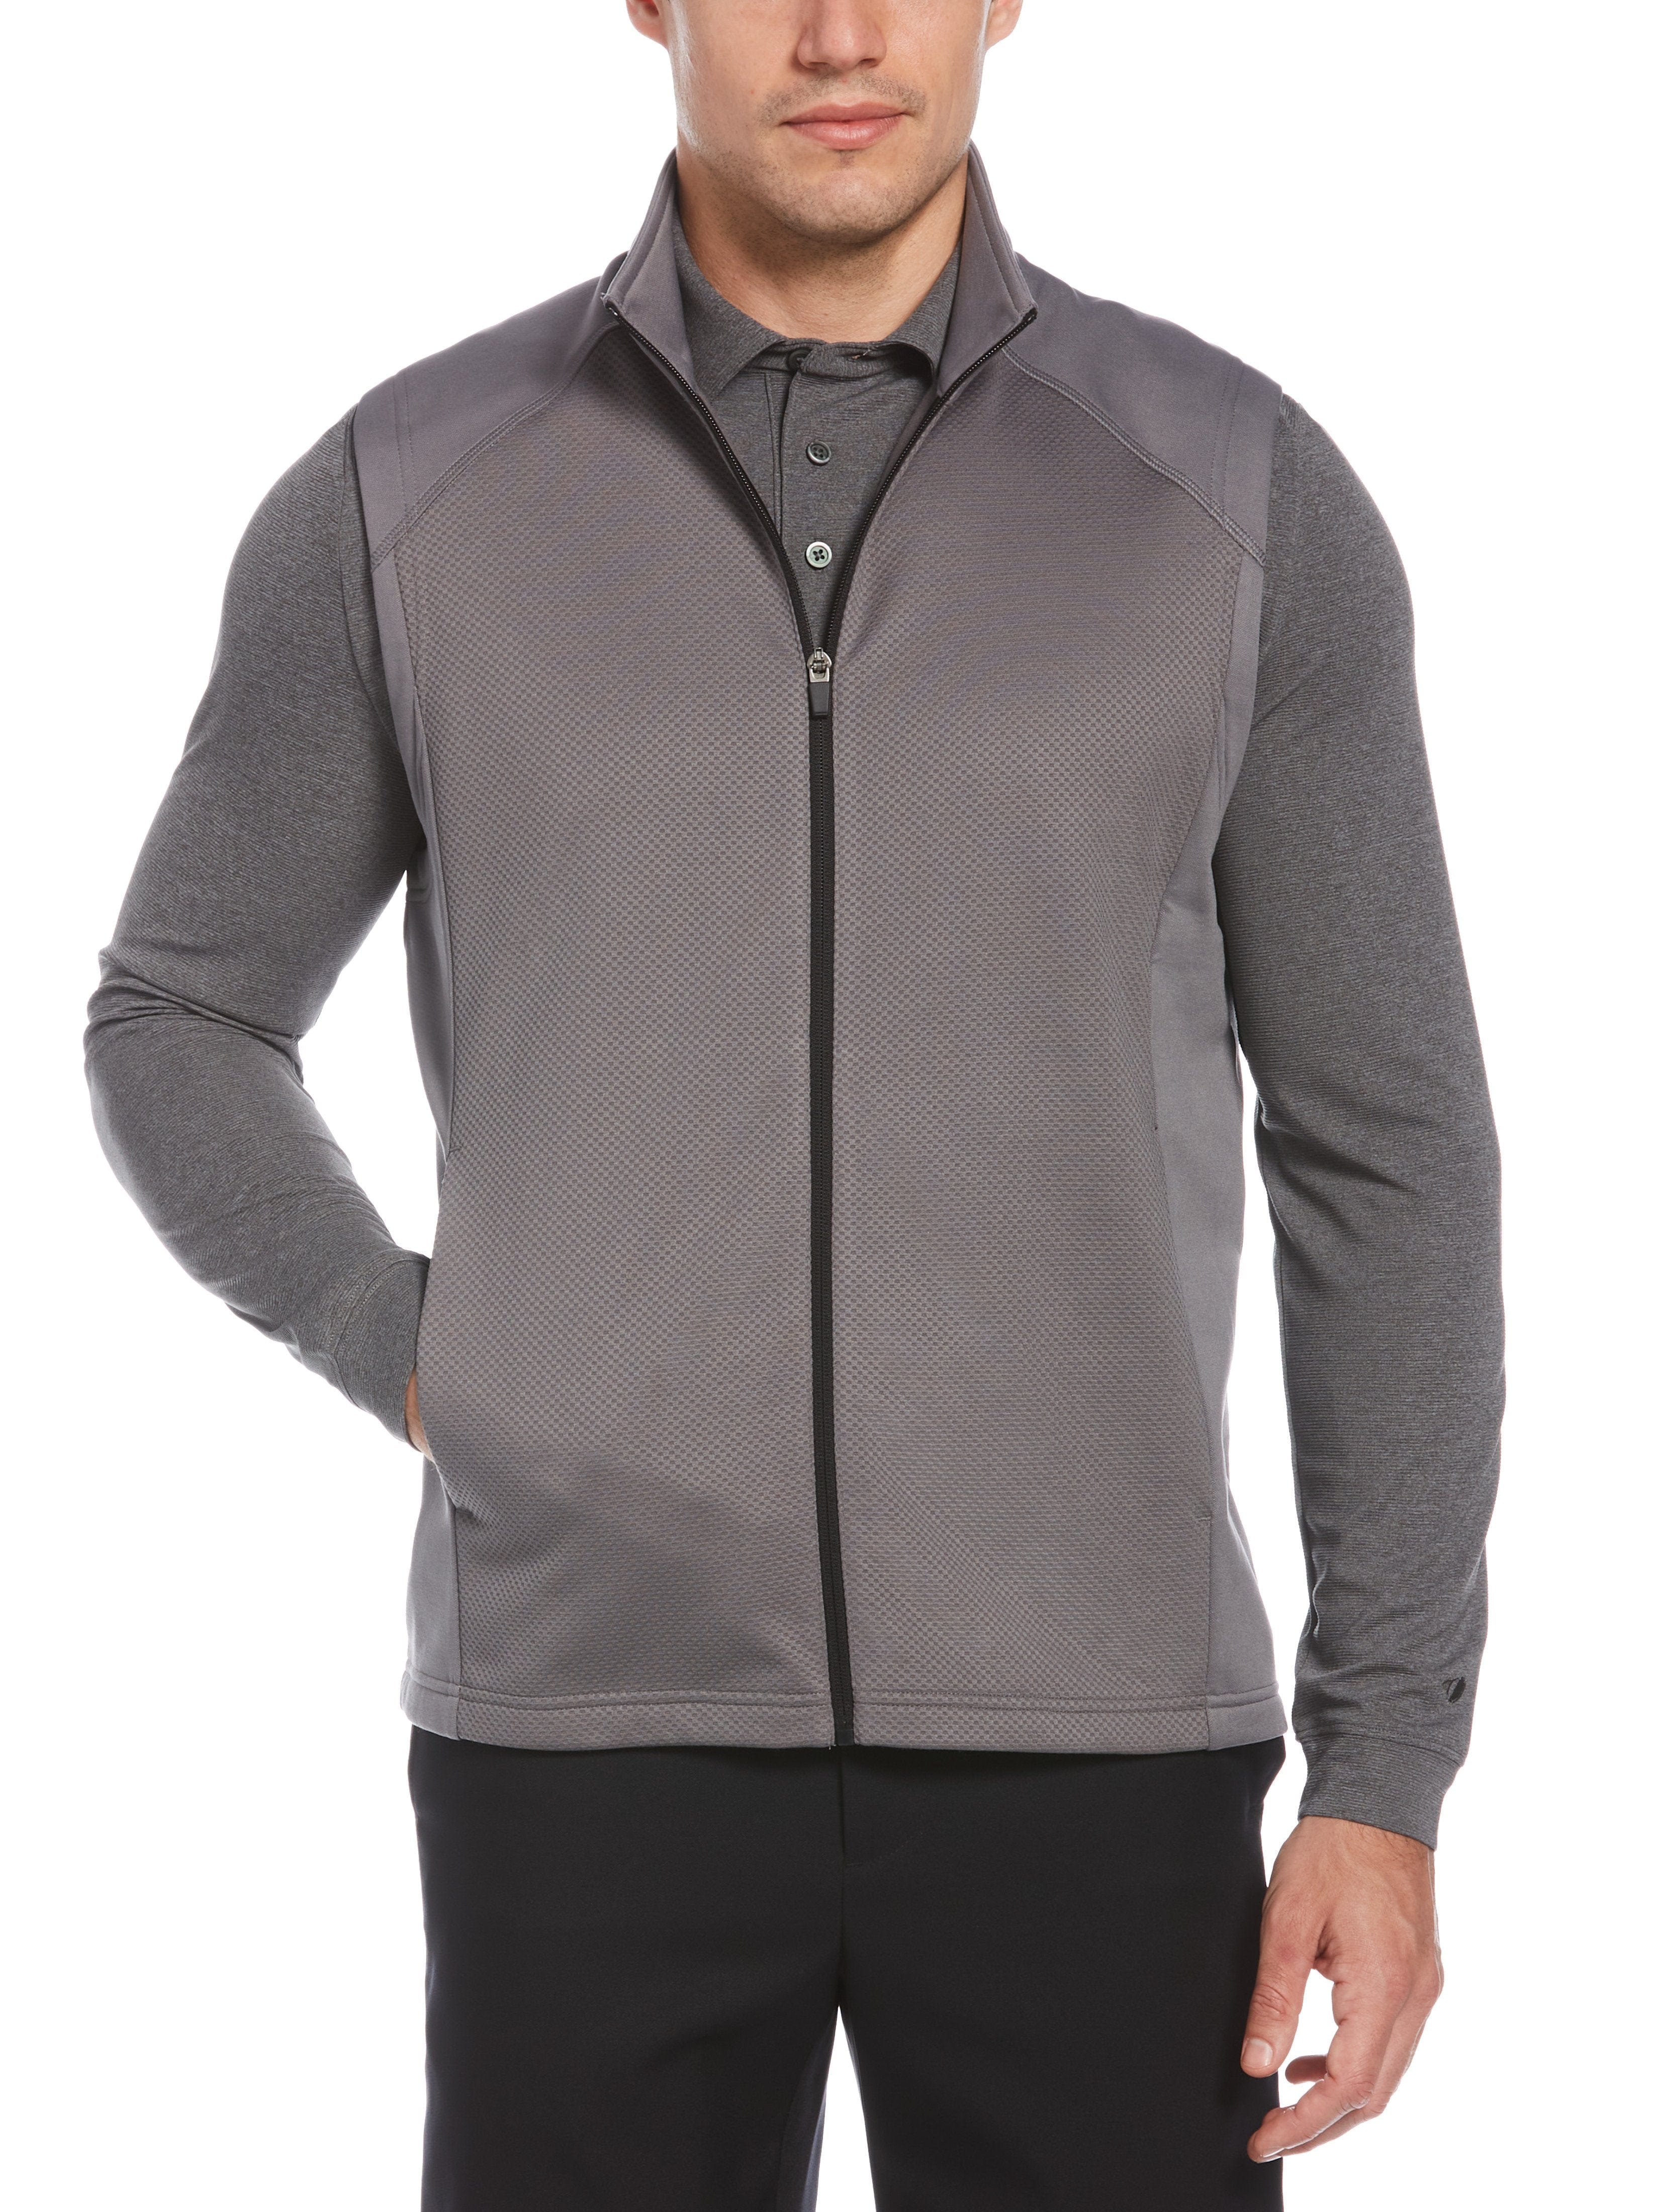 PGA TOUR Apparel Mens Mixed Texture Fleece Golf Vest Top, Size Large, Quiet Shade Gray, 100% Polyester | Golf Apparel Shop